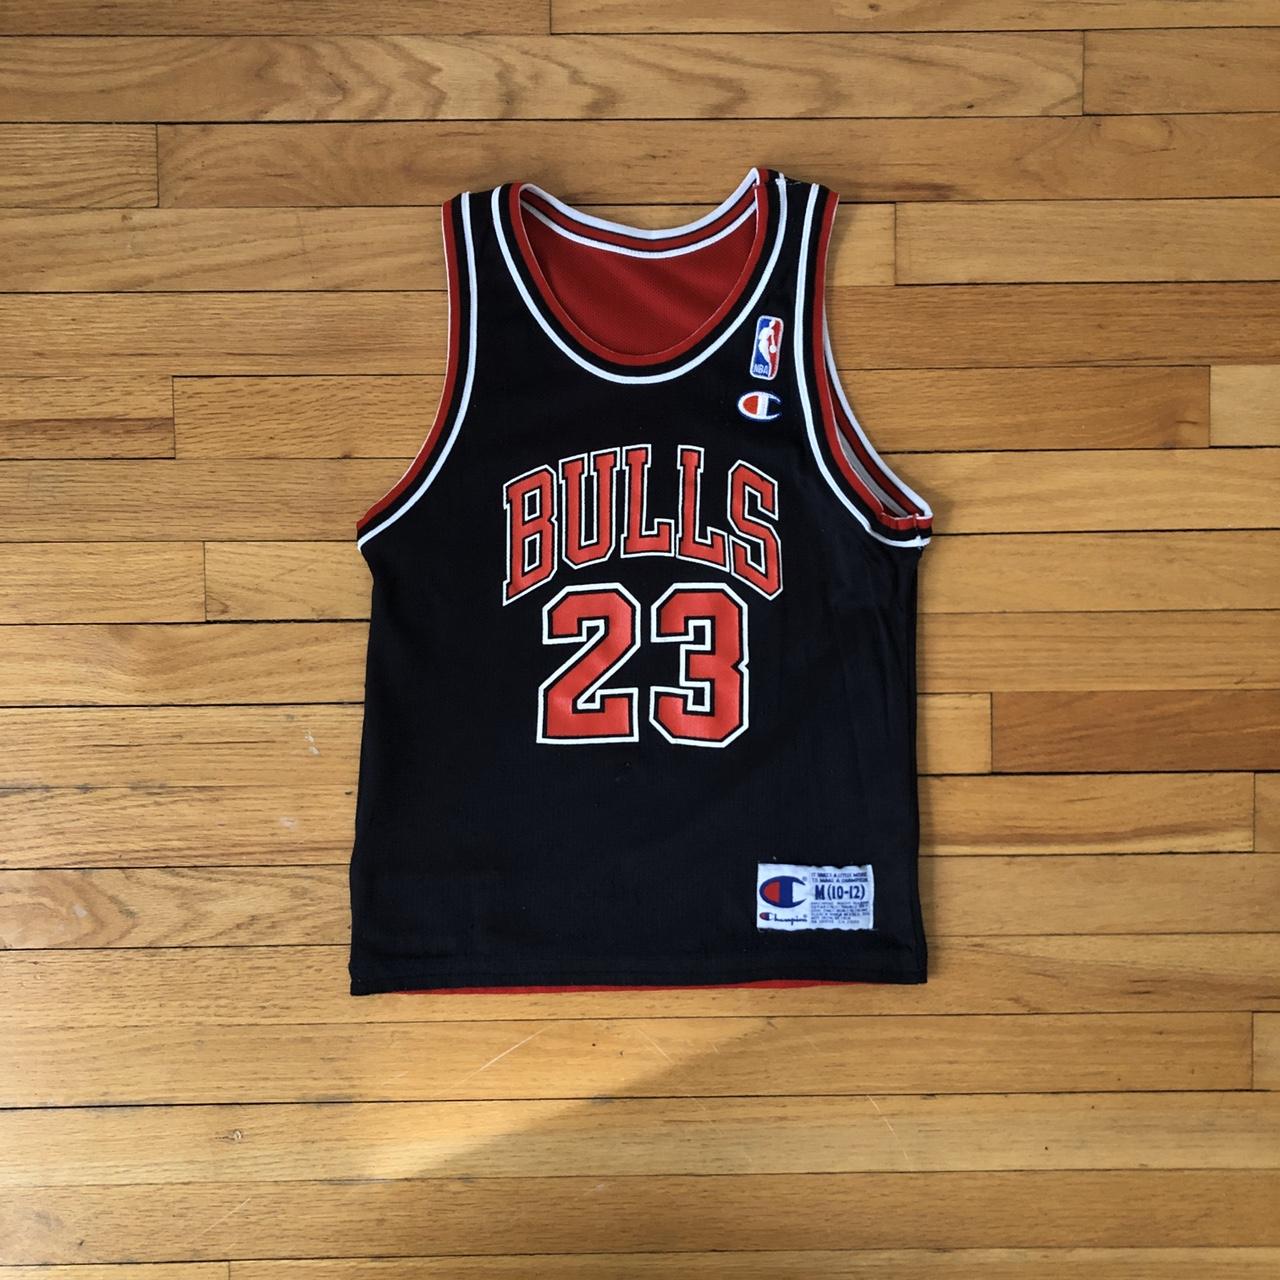 90s Youth Bulls 10 Jersey 